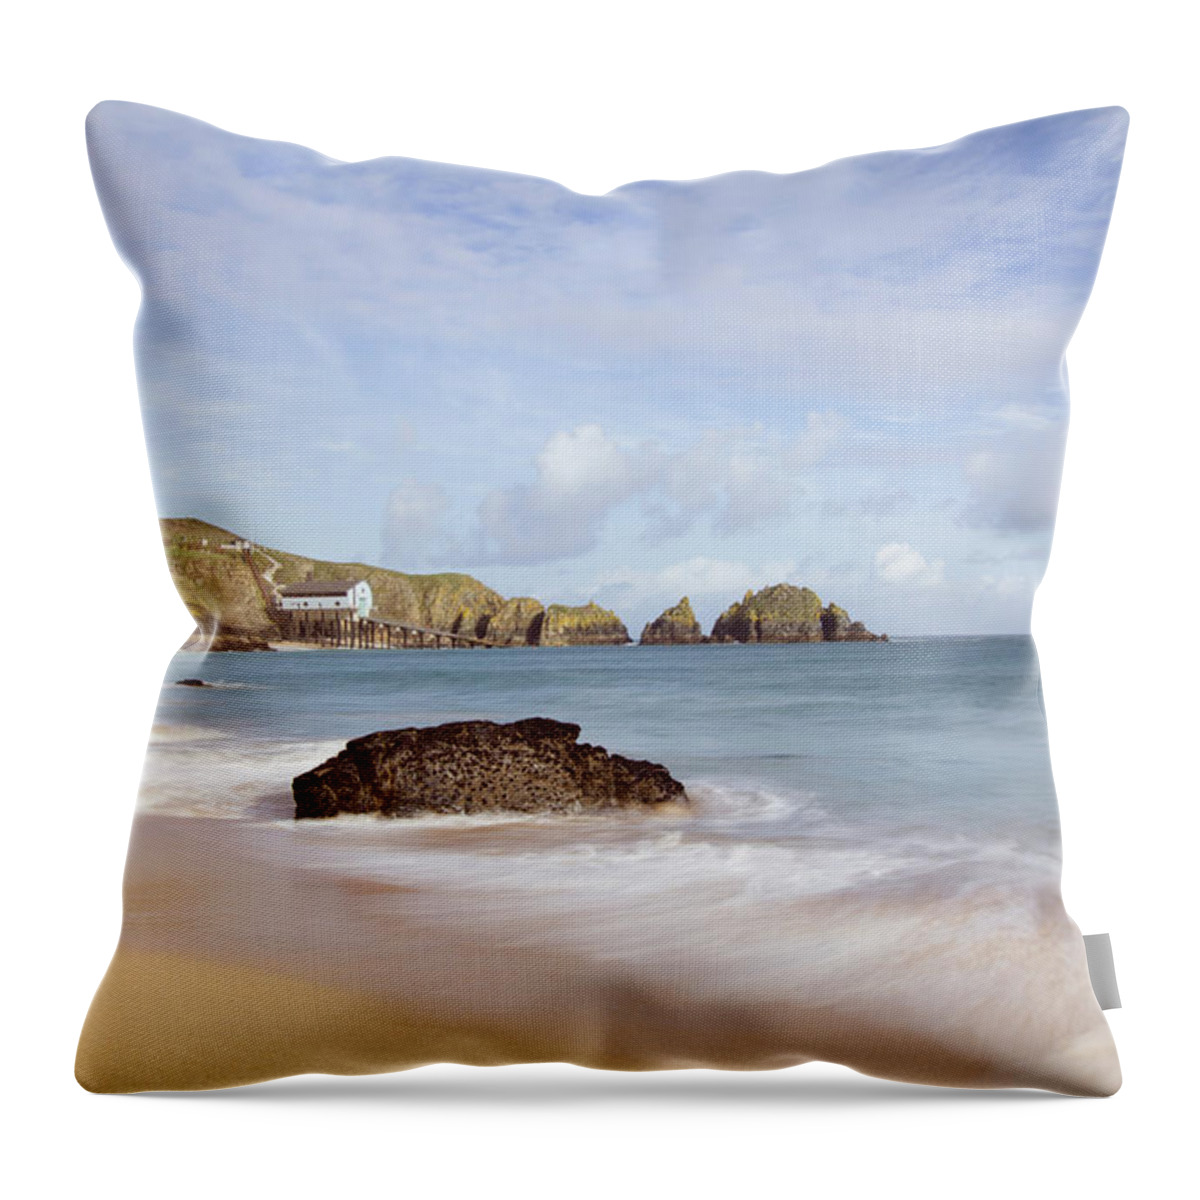 Water's Edge Throw Pillow featuring the photograph Cornish Beach Scene by Mattstansfield